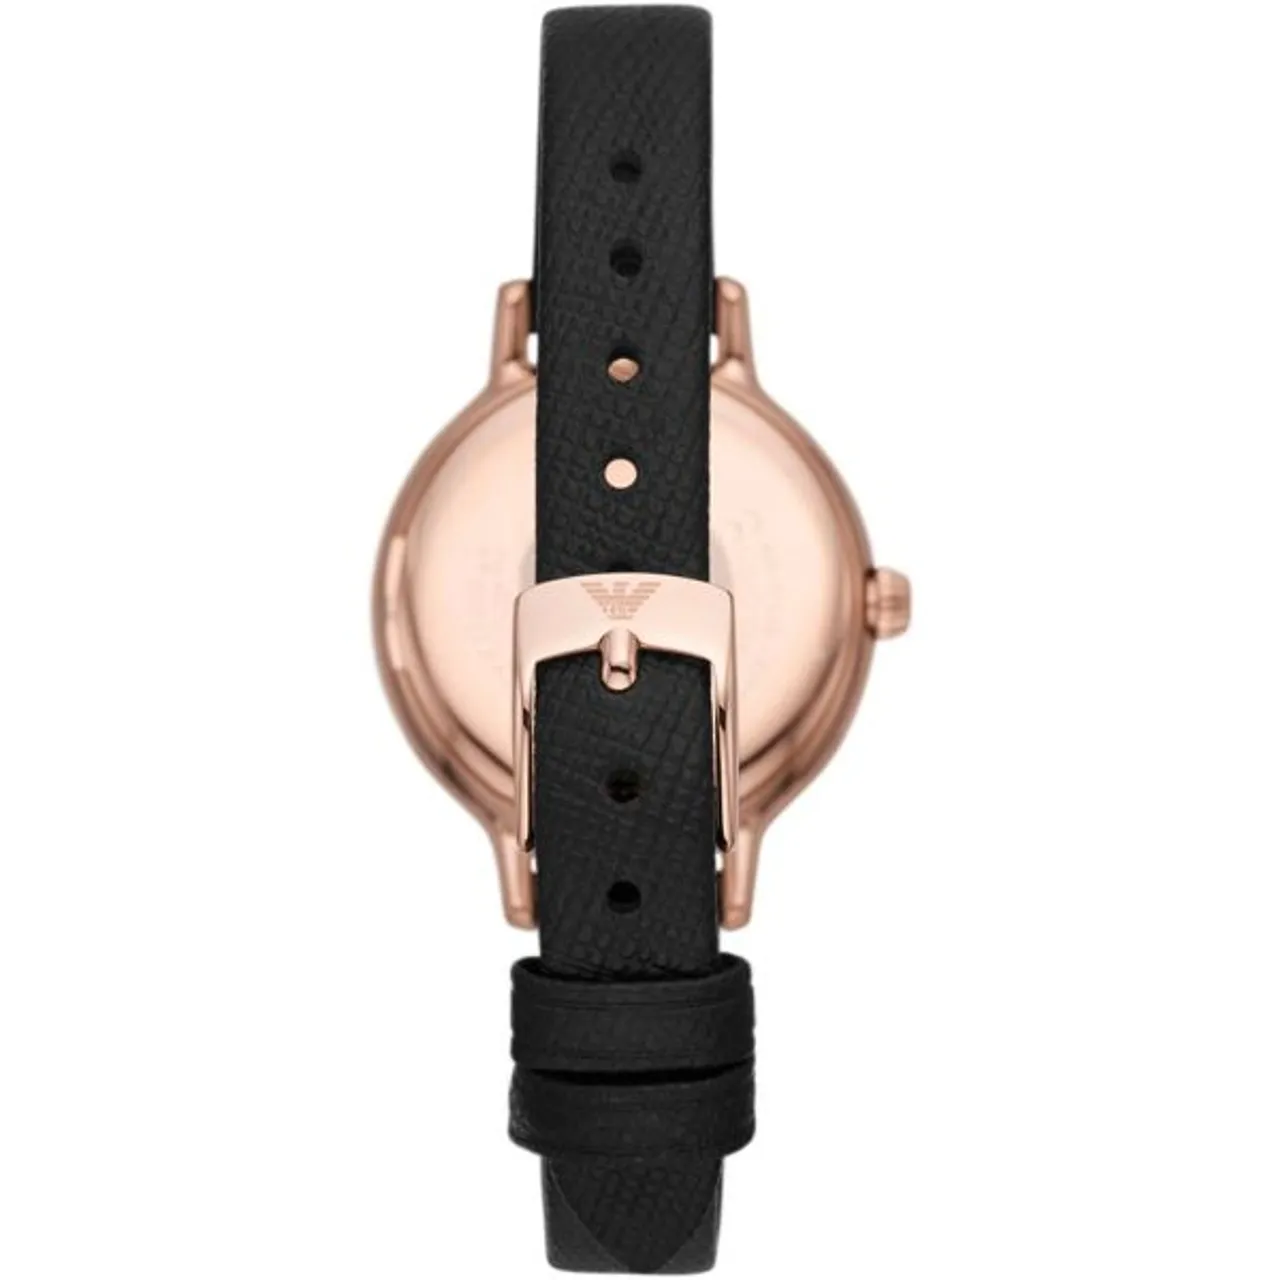 Quarzuhr EMPORIO ARMANI "AR11514" Armbanduhren rosegold (schwarz) Damen Quarzuhren Armbanduhr, Damenuhr, Perlmutt-Zifferblatt, Mondphase, analog